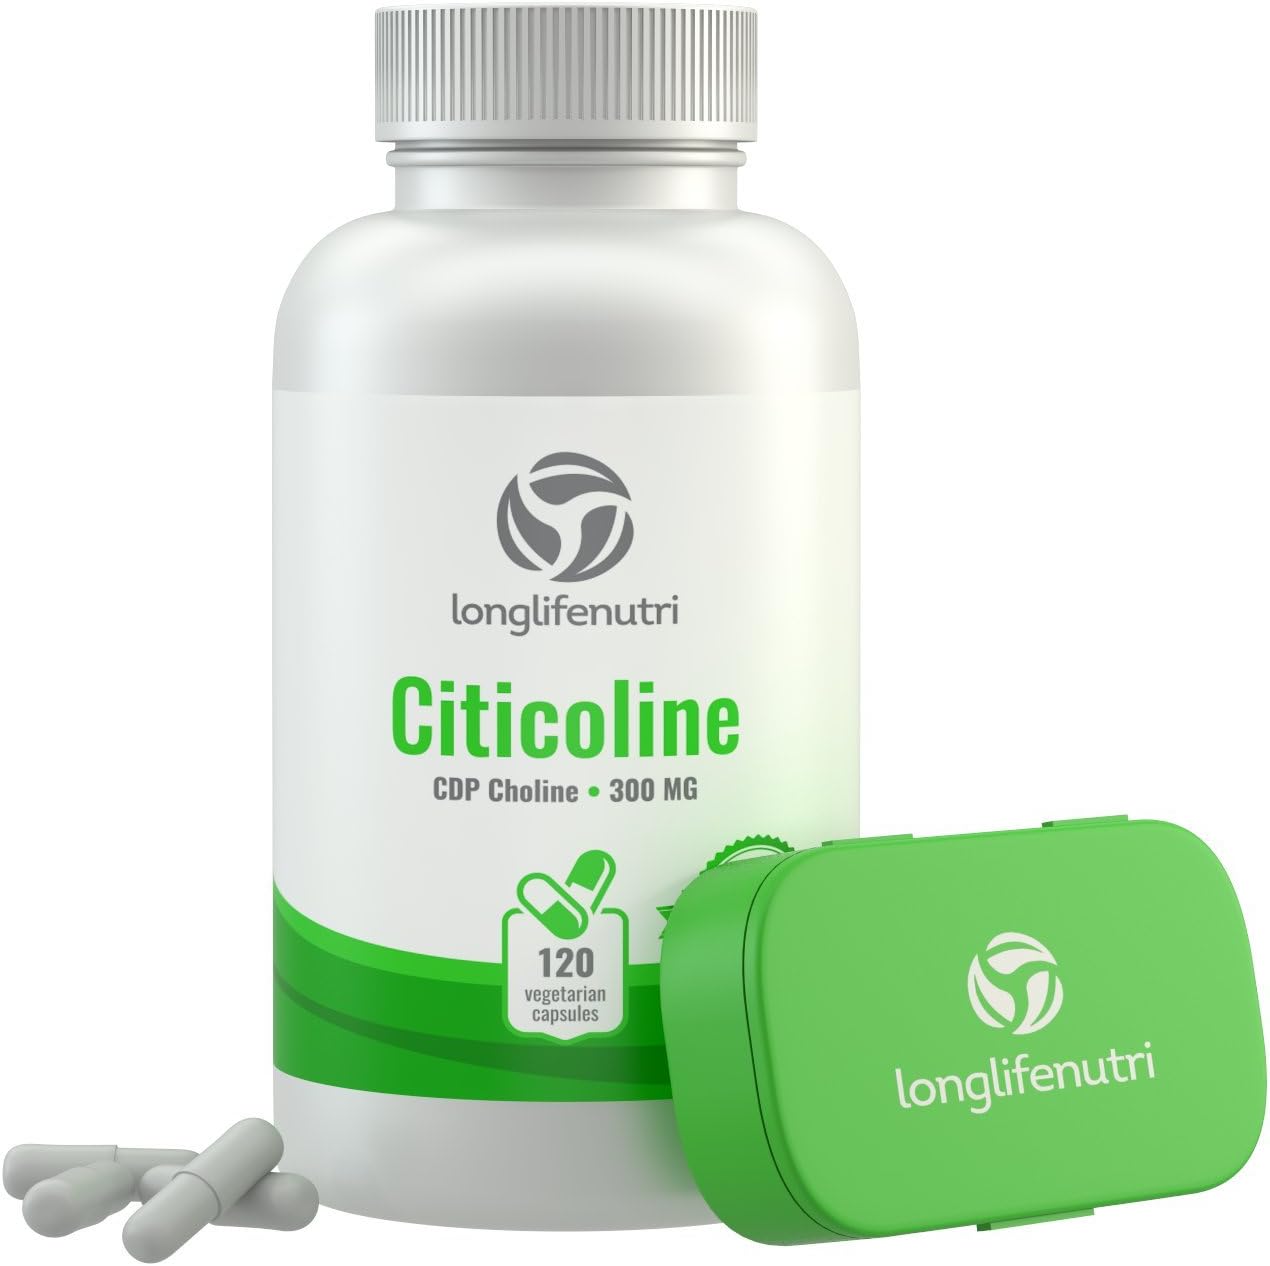 Citicoline CDP Choline 300mg Capsules